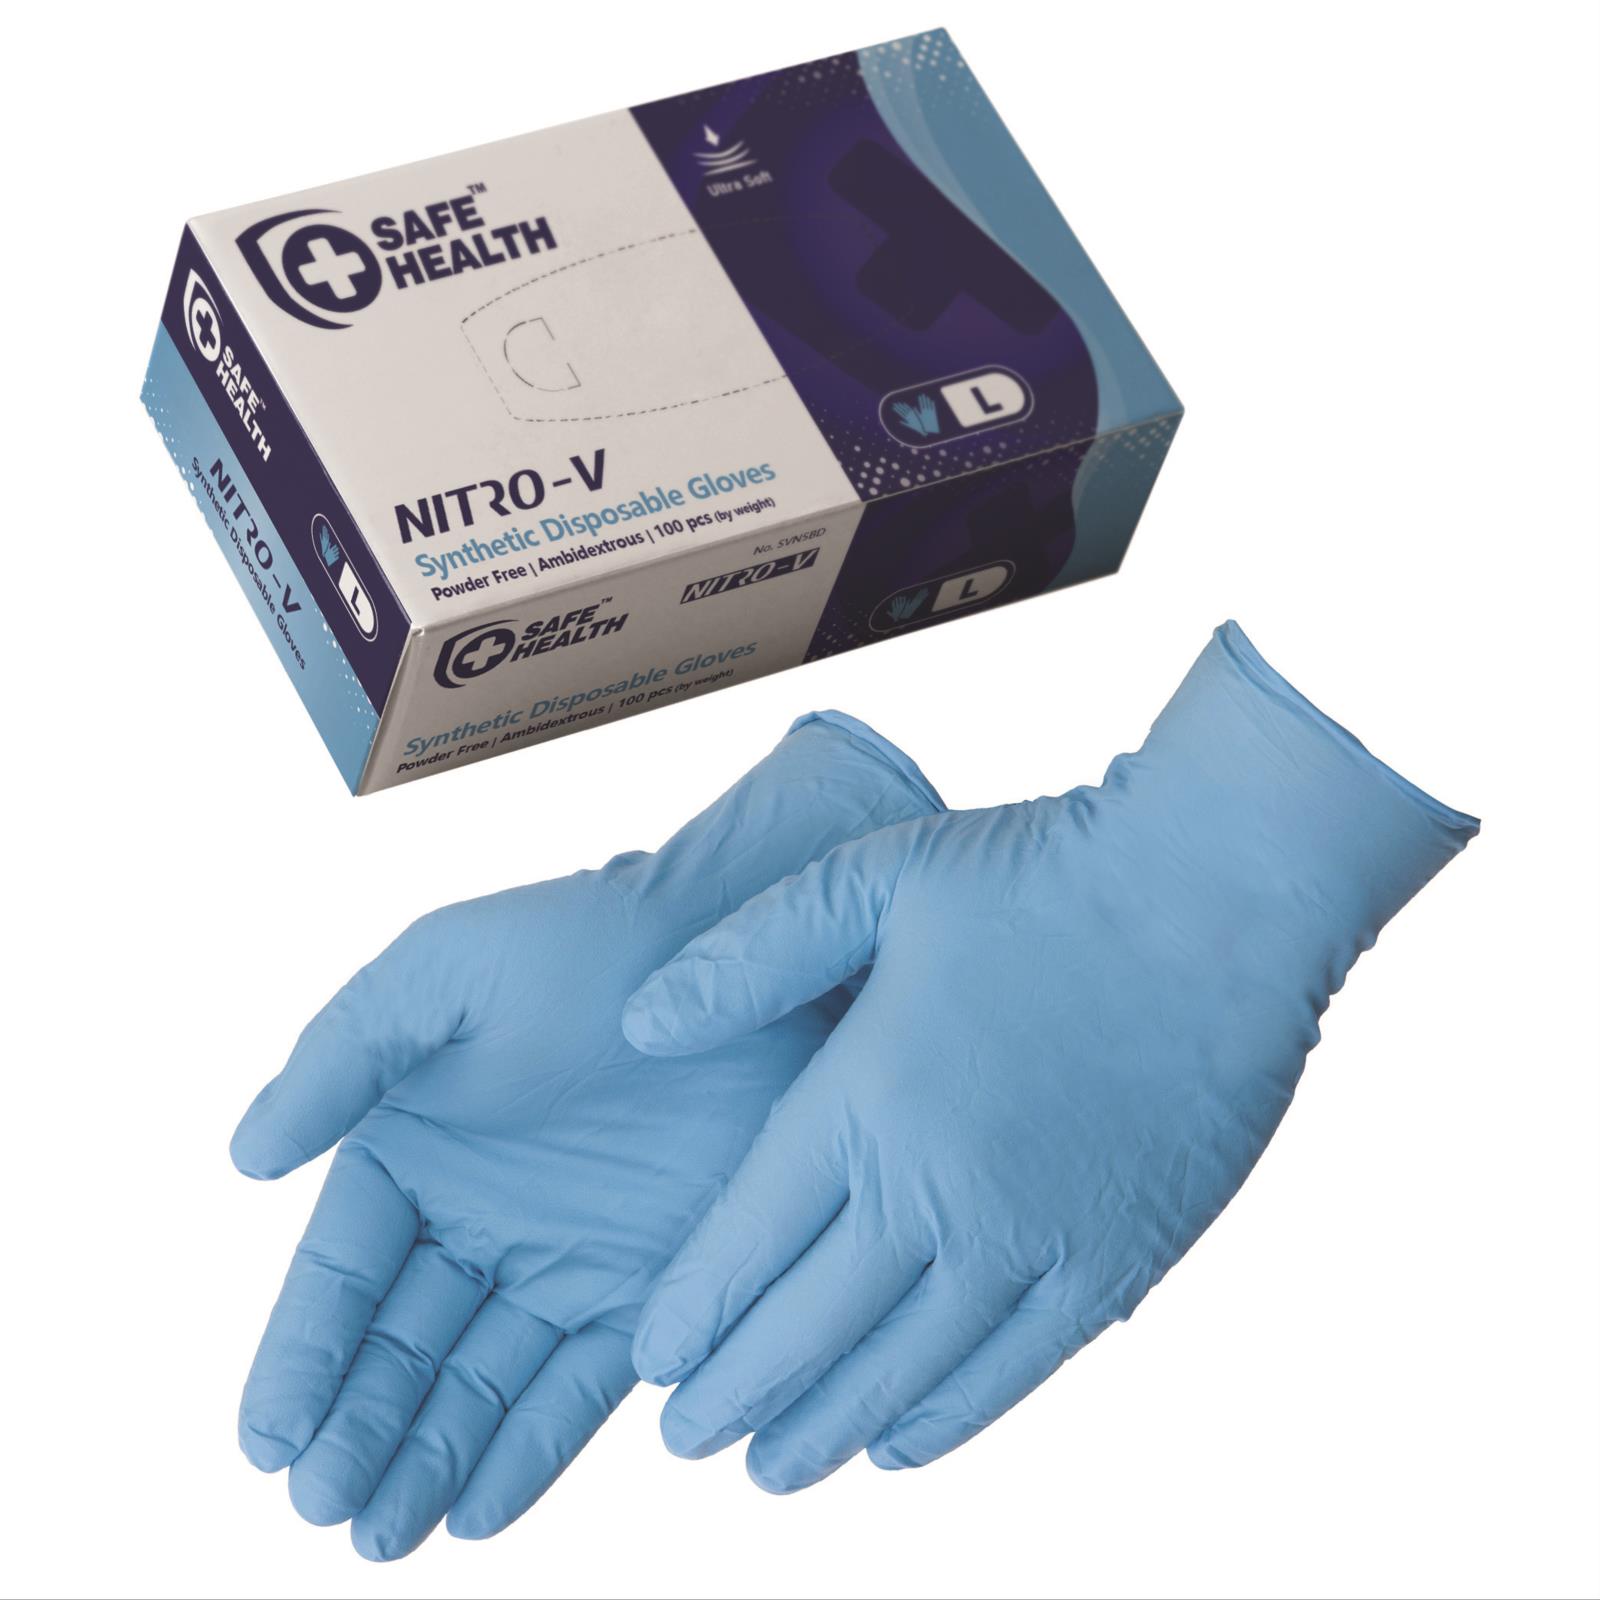 Safe™ Health Nitro-V, Synthetic Disposable Gloves